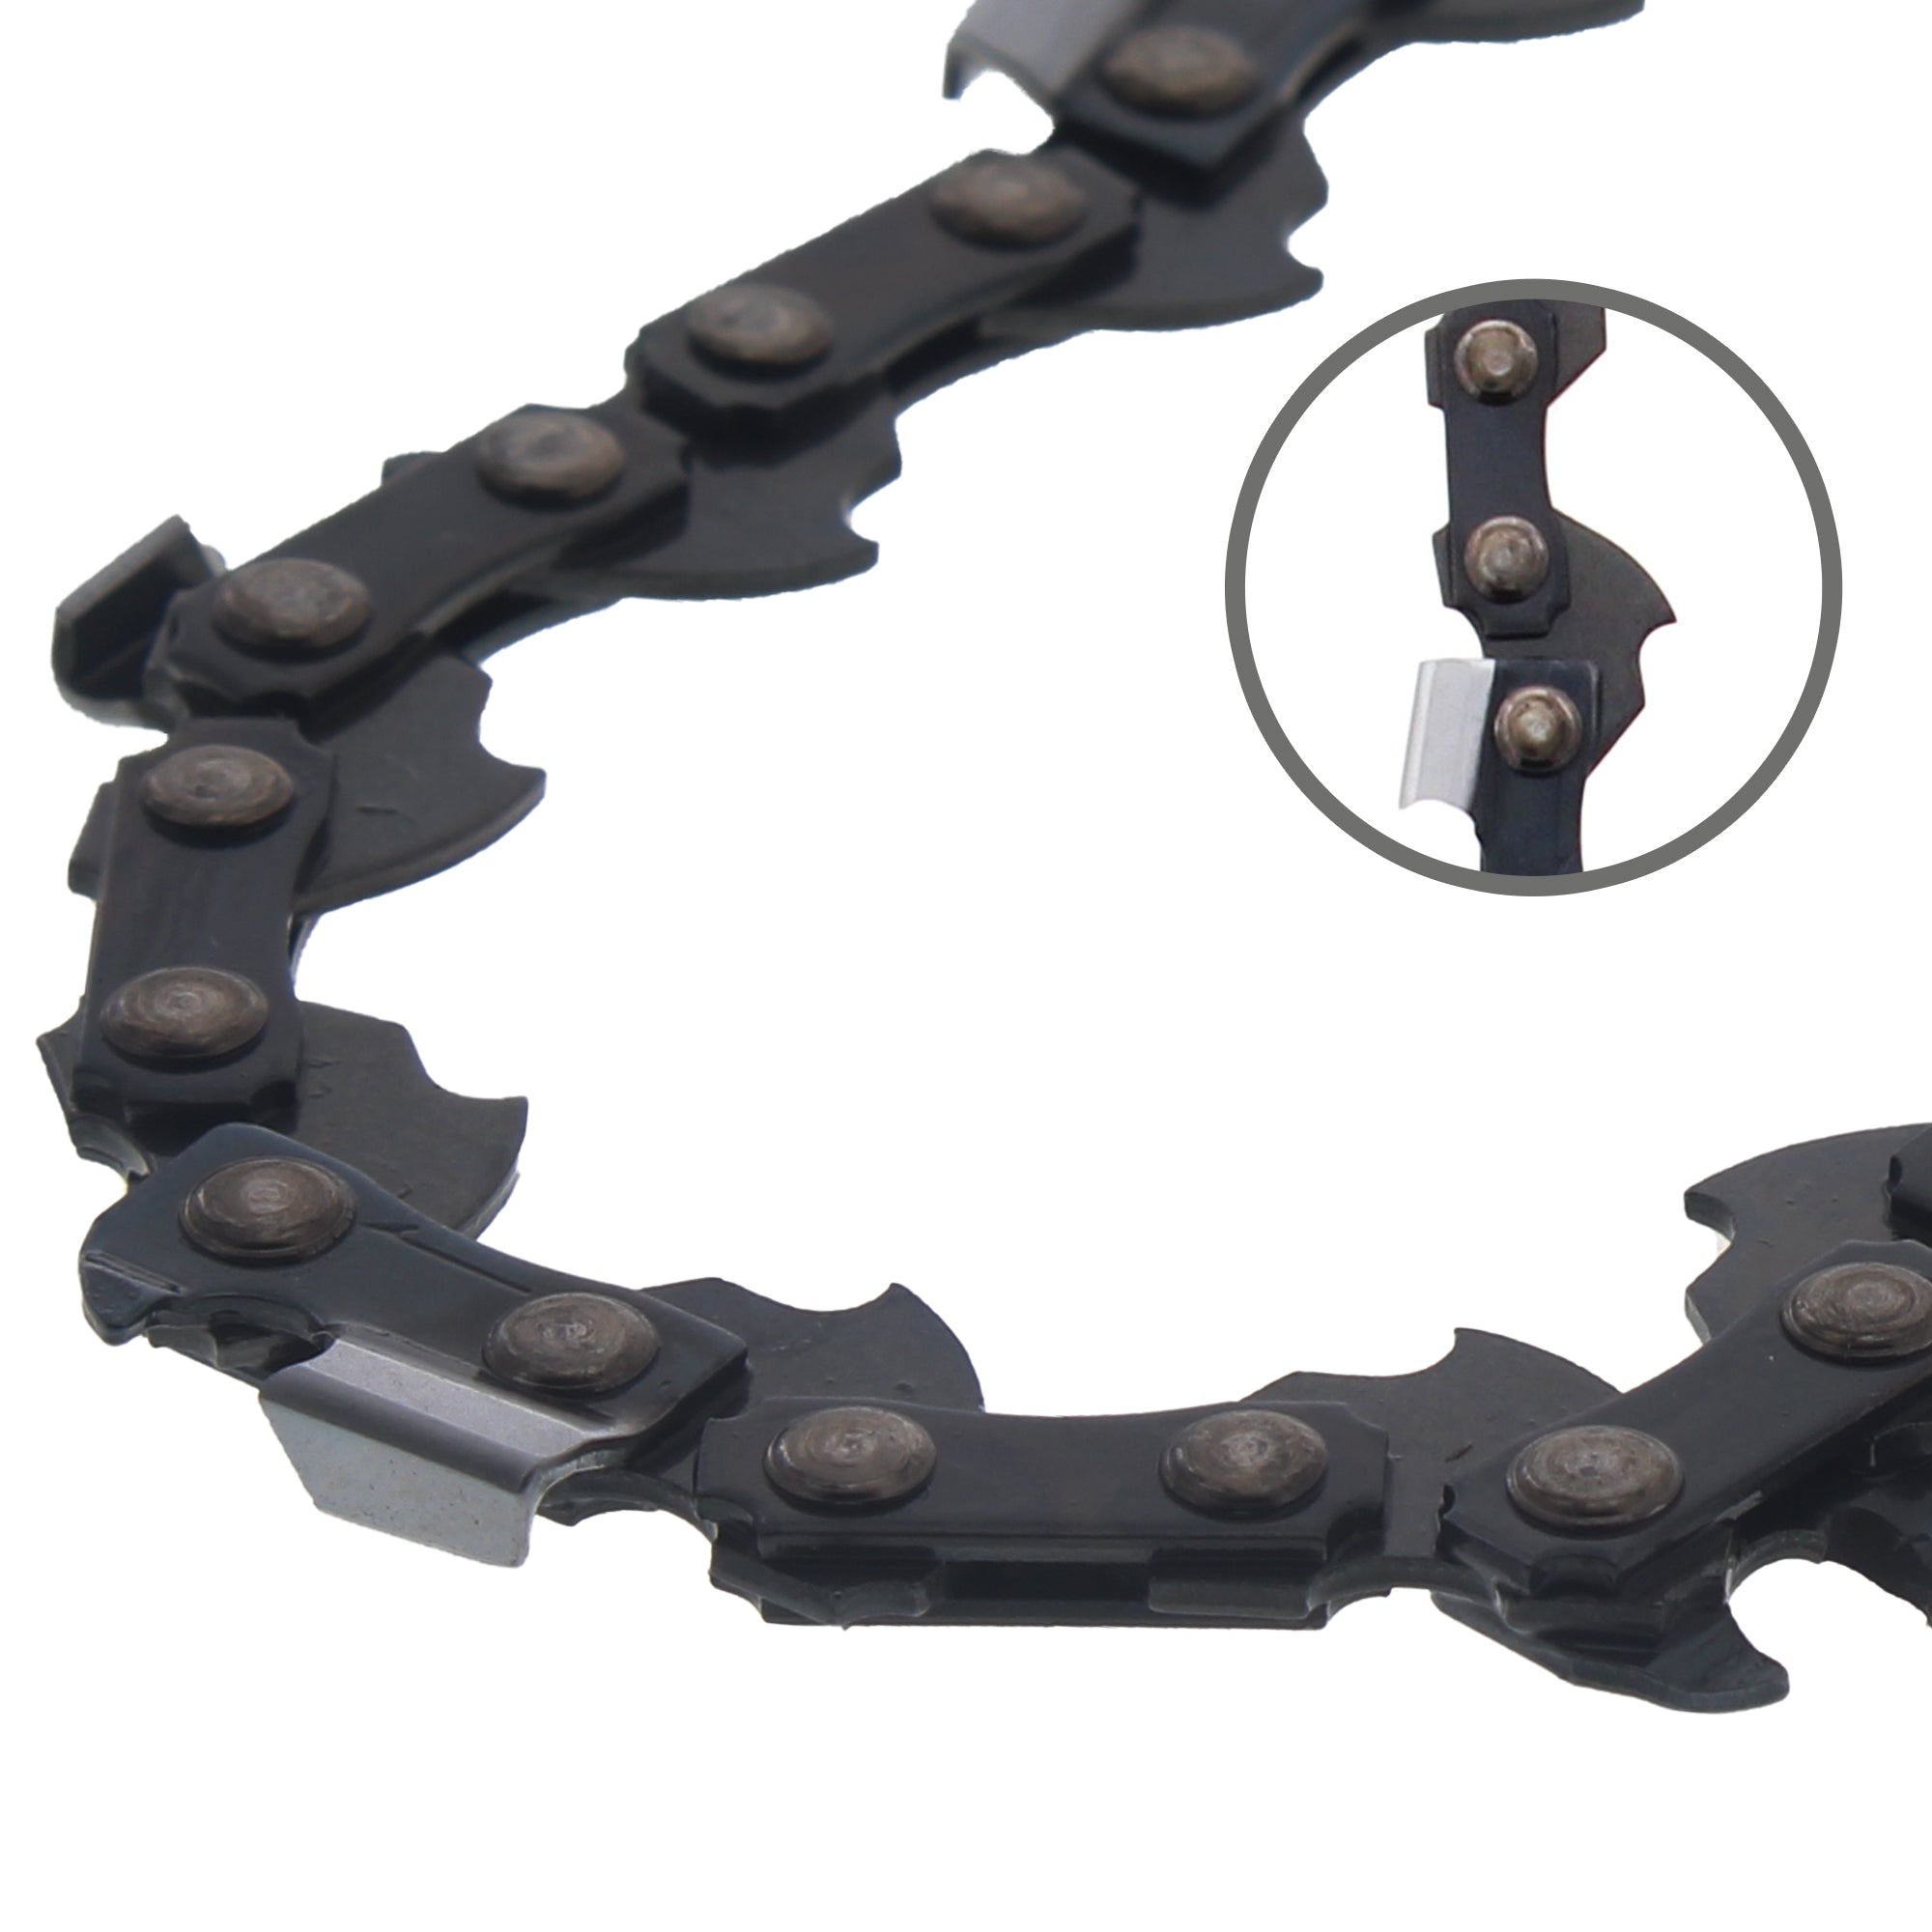 Chainsaw Guide Bar & 2 Semi-Chisel Chain For Stihl 010 91PXL055G 16